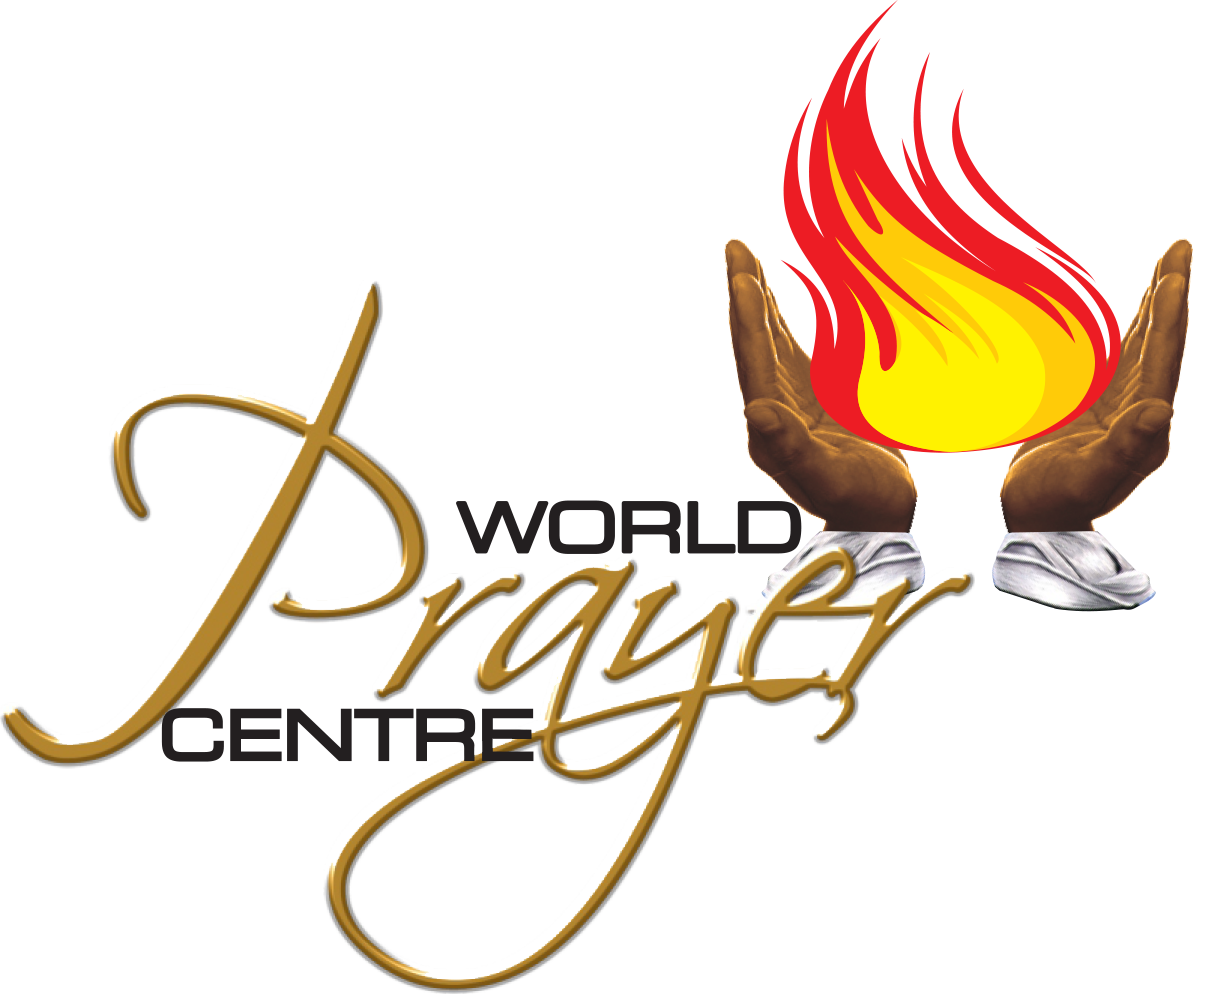 World Prayer Centre USA